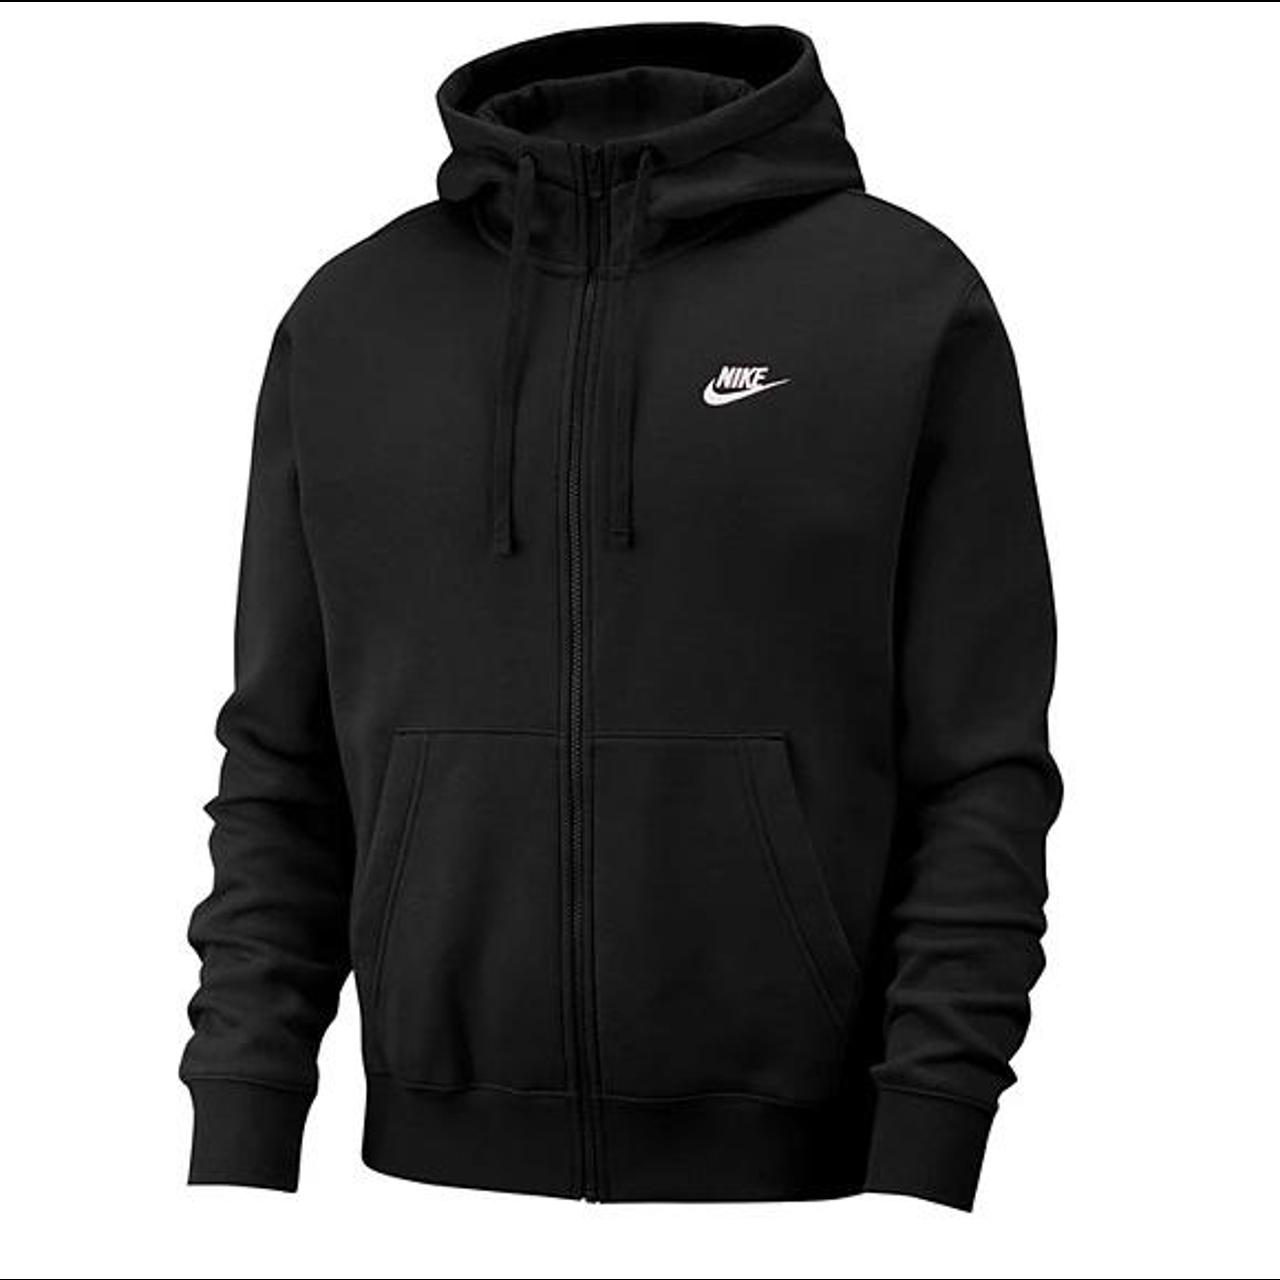 Nike zip up hoodie size men’s large No stains just... - Depop